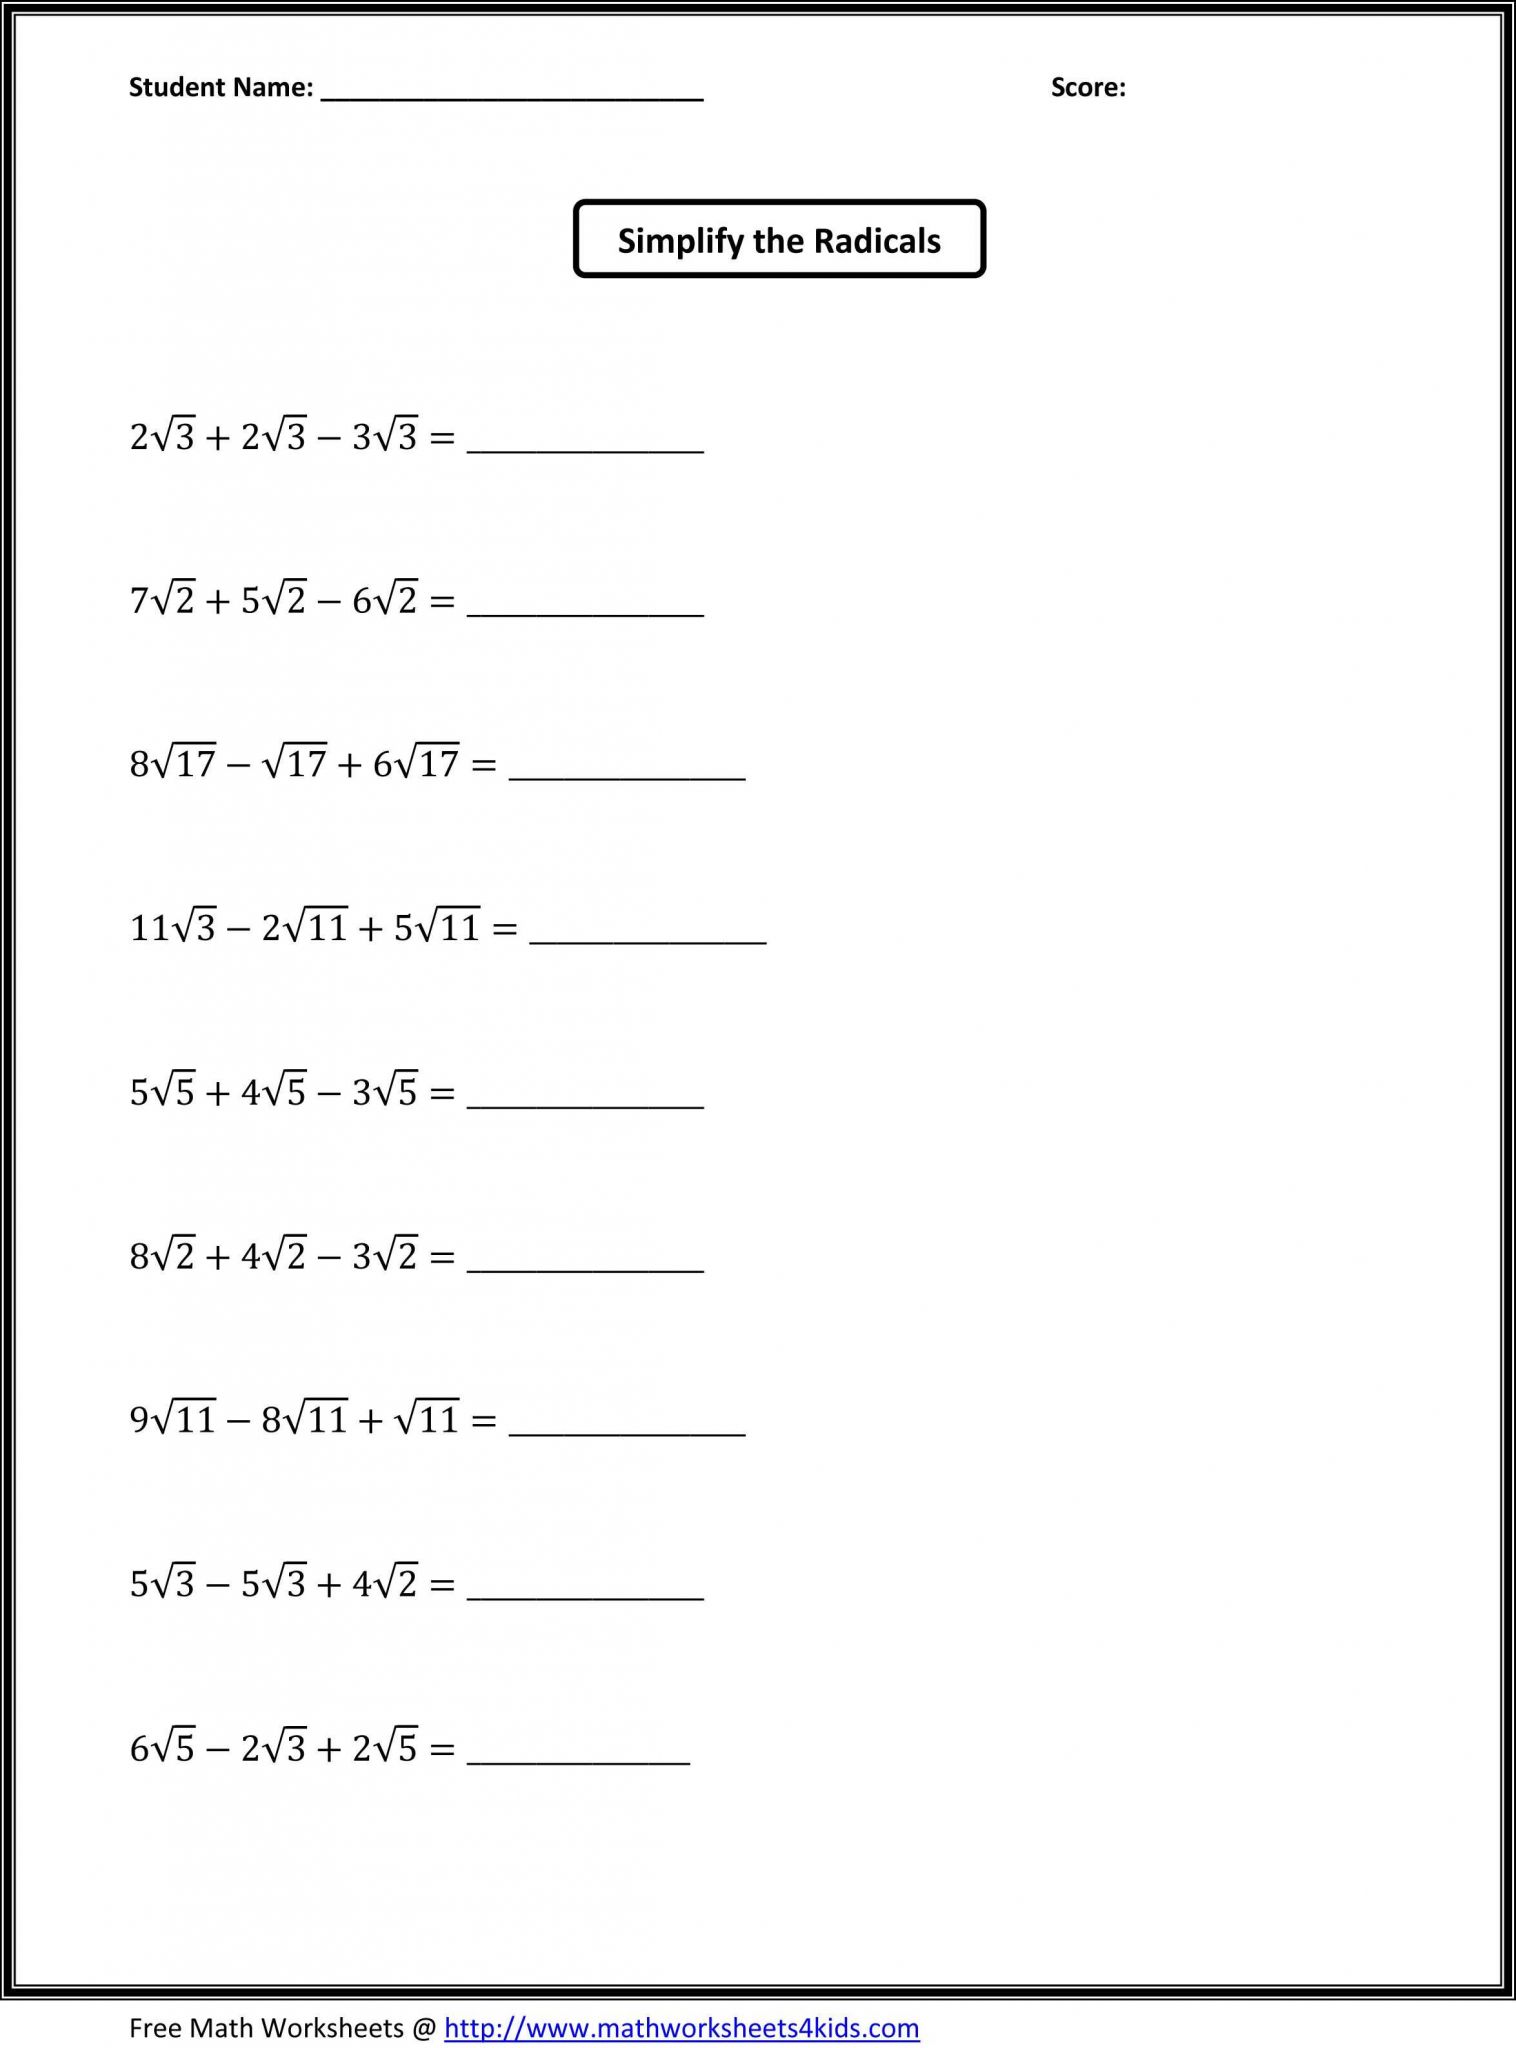 Mean Median Mode and Range Worksheets and 6th Grade Math Worksheets